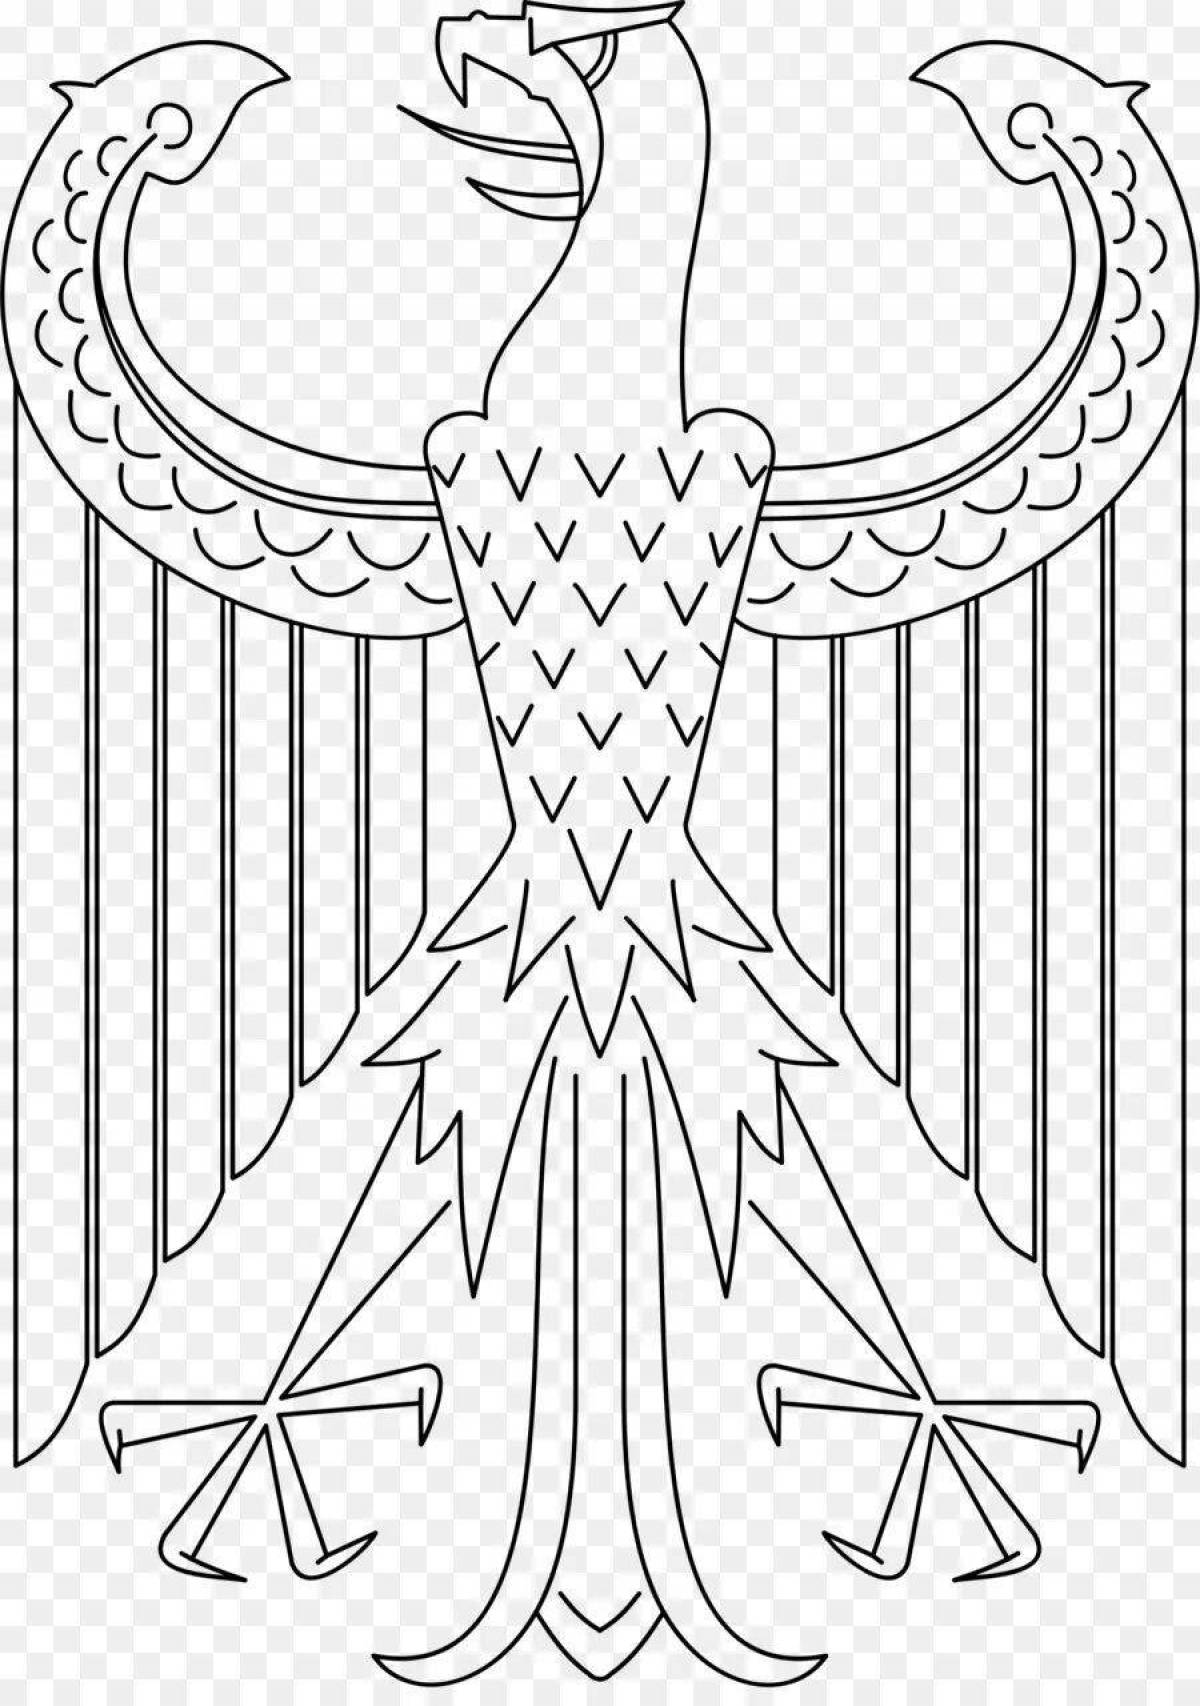 German coat of arms #3